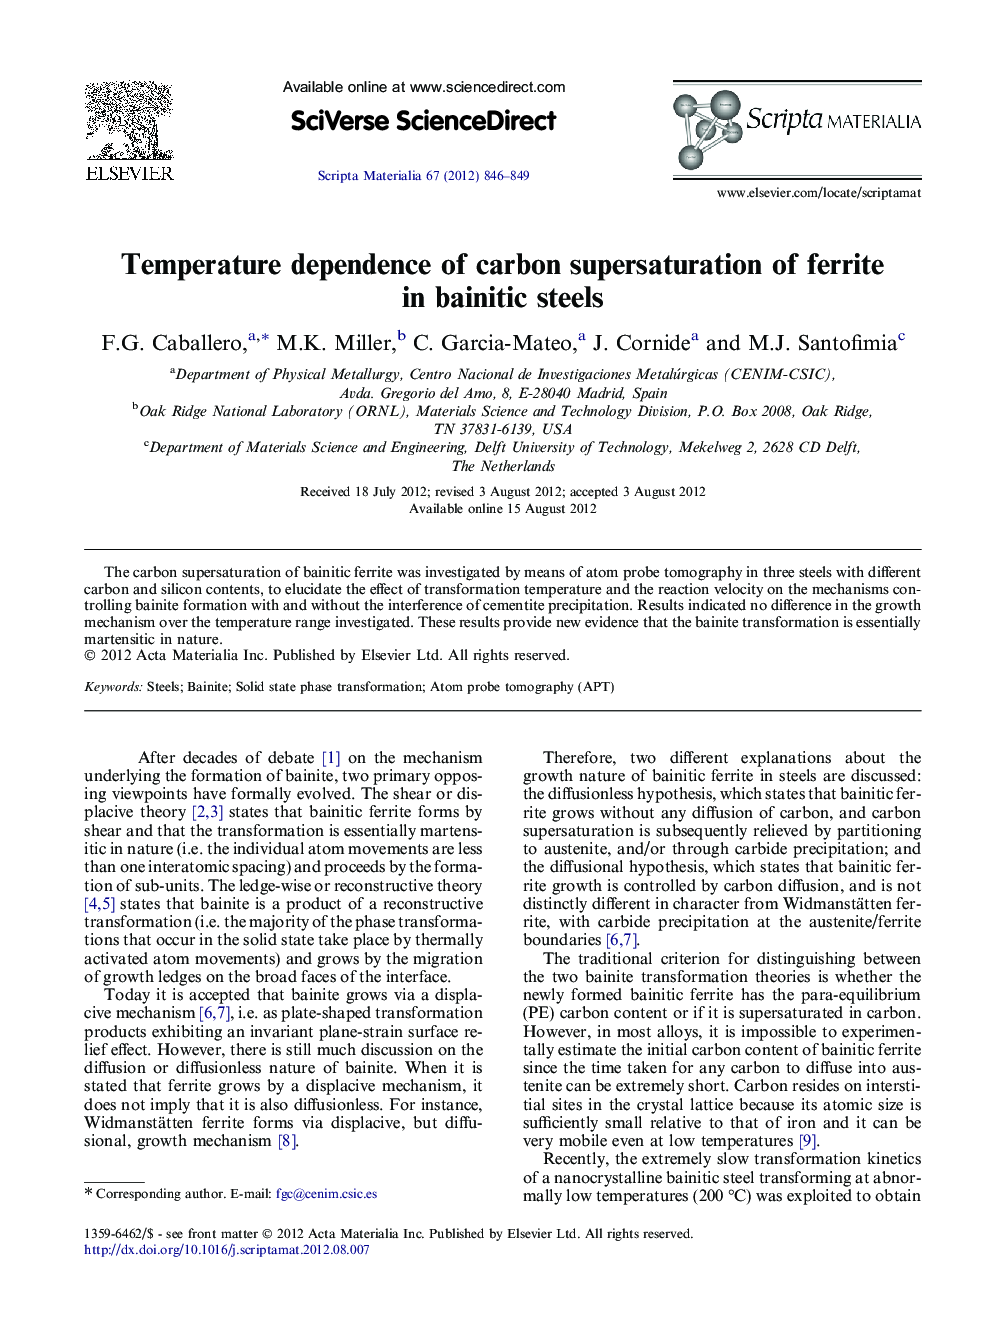 Temperature dependence of carbon supersaturation of ferrite in bainitic steels